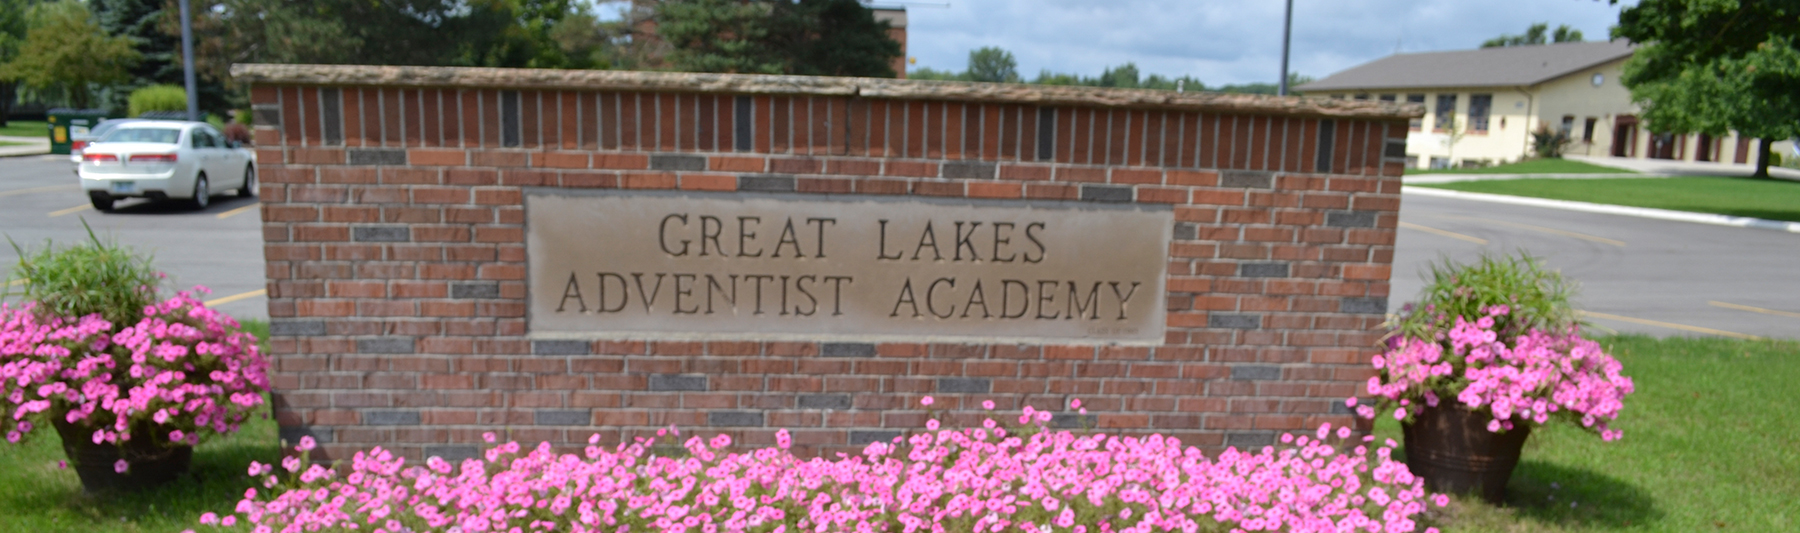 Academy Days April 24-25 2022 - Great Lakes Adventist Academy